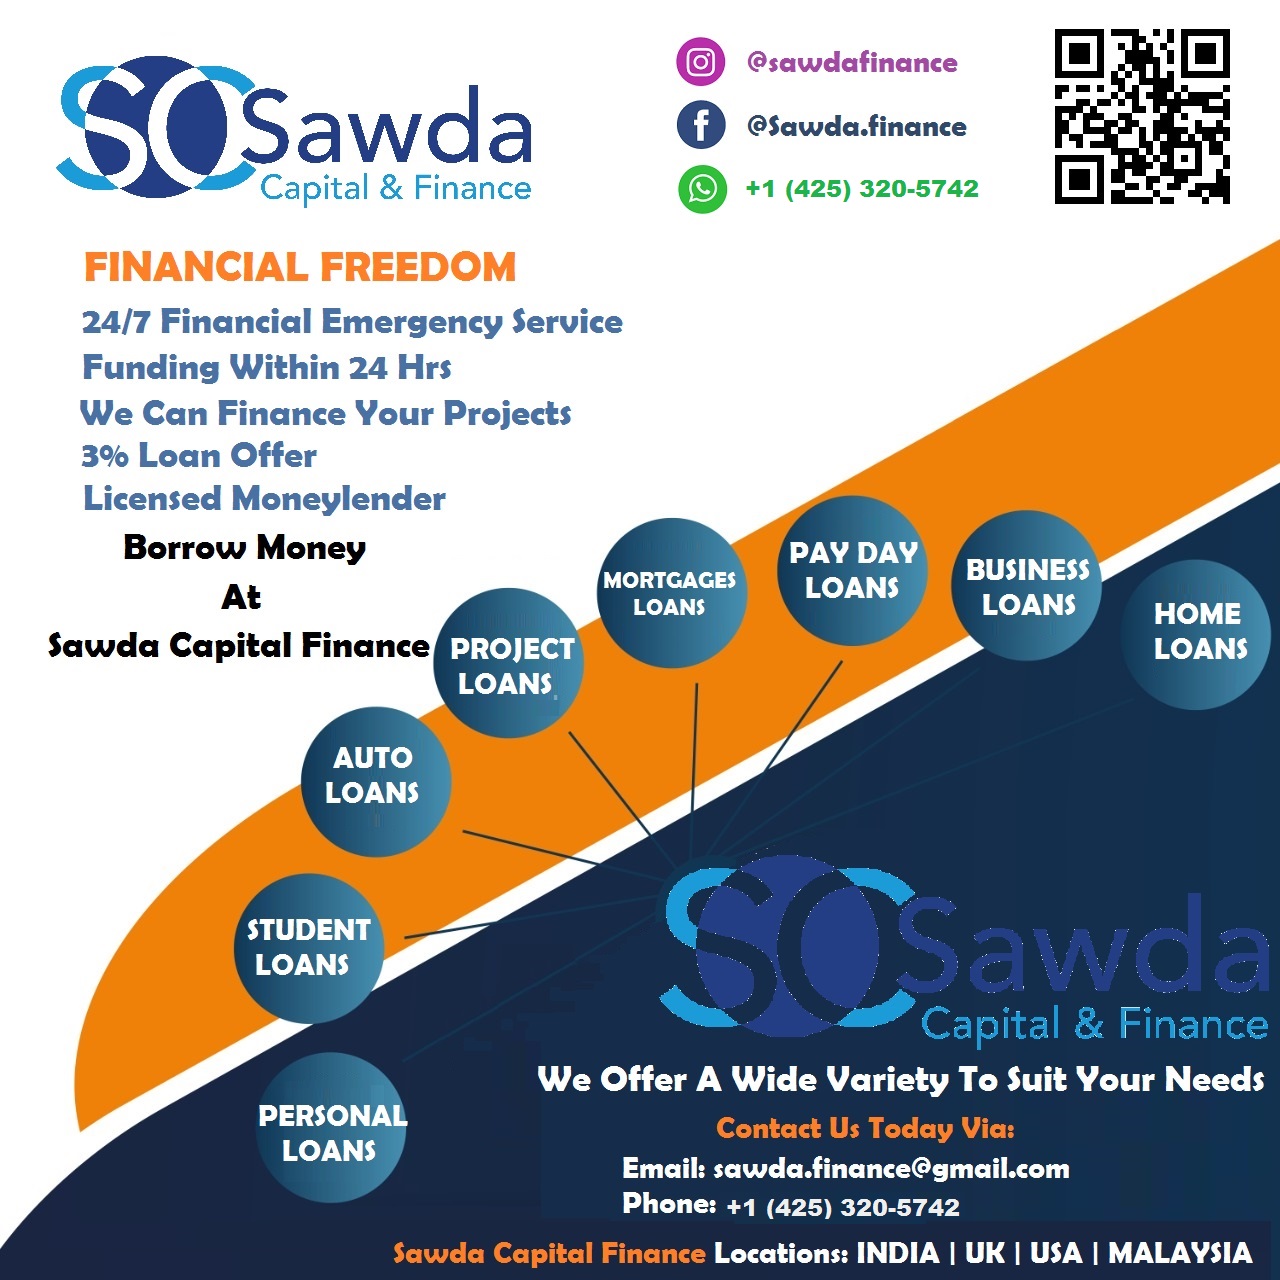 Borrow Money At Sawda Capital Finance